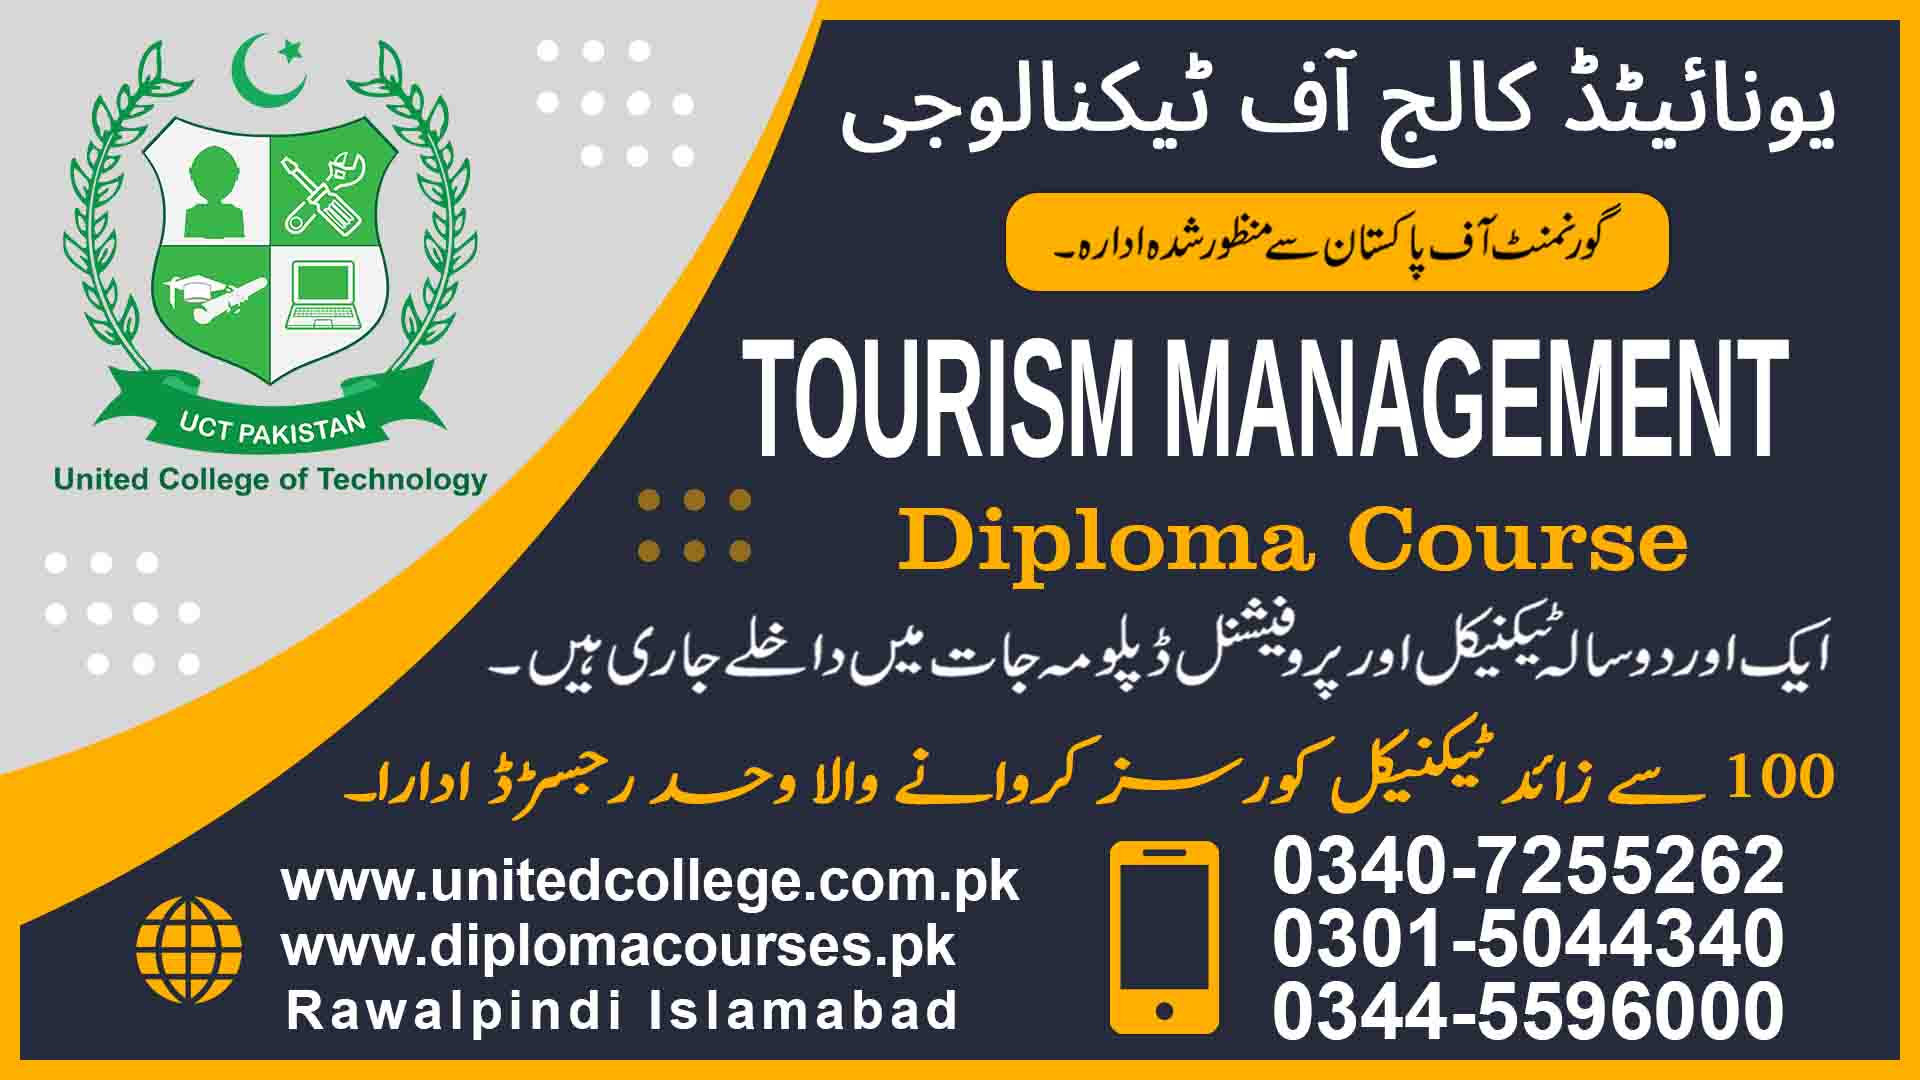 TOURISM MANAGEMENT COURSE IN RAWALPINDI ISLAMABAD PAKISTAN